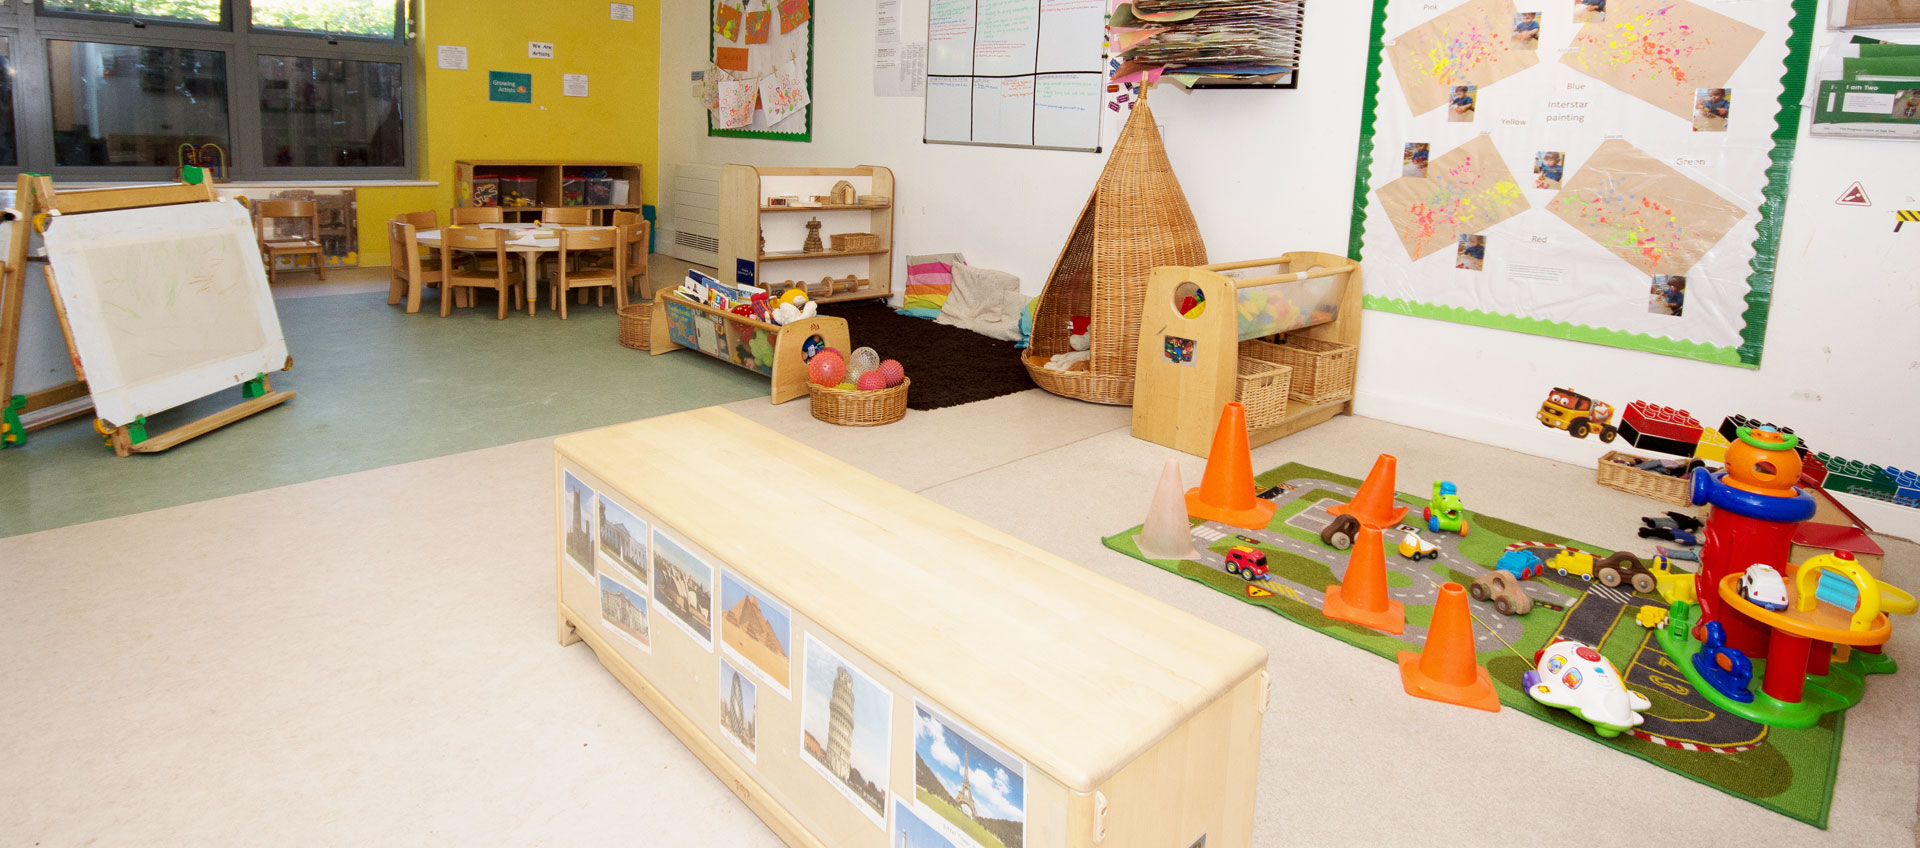 Ely Day Nursery and Preschool